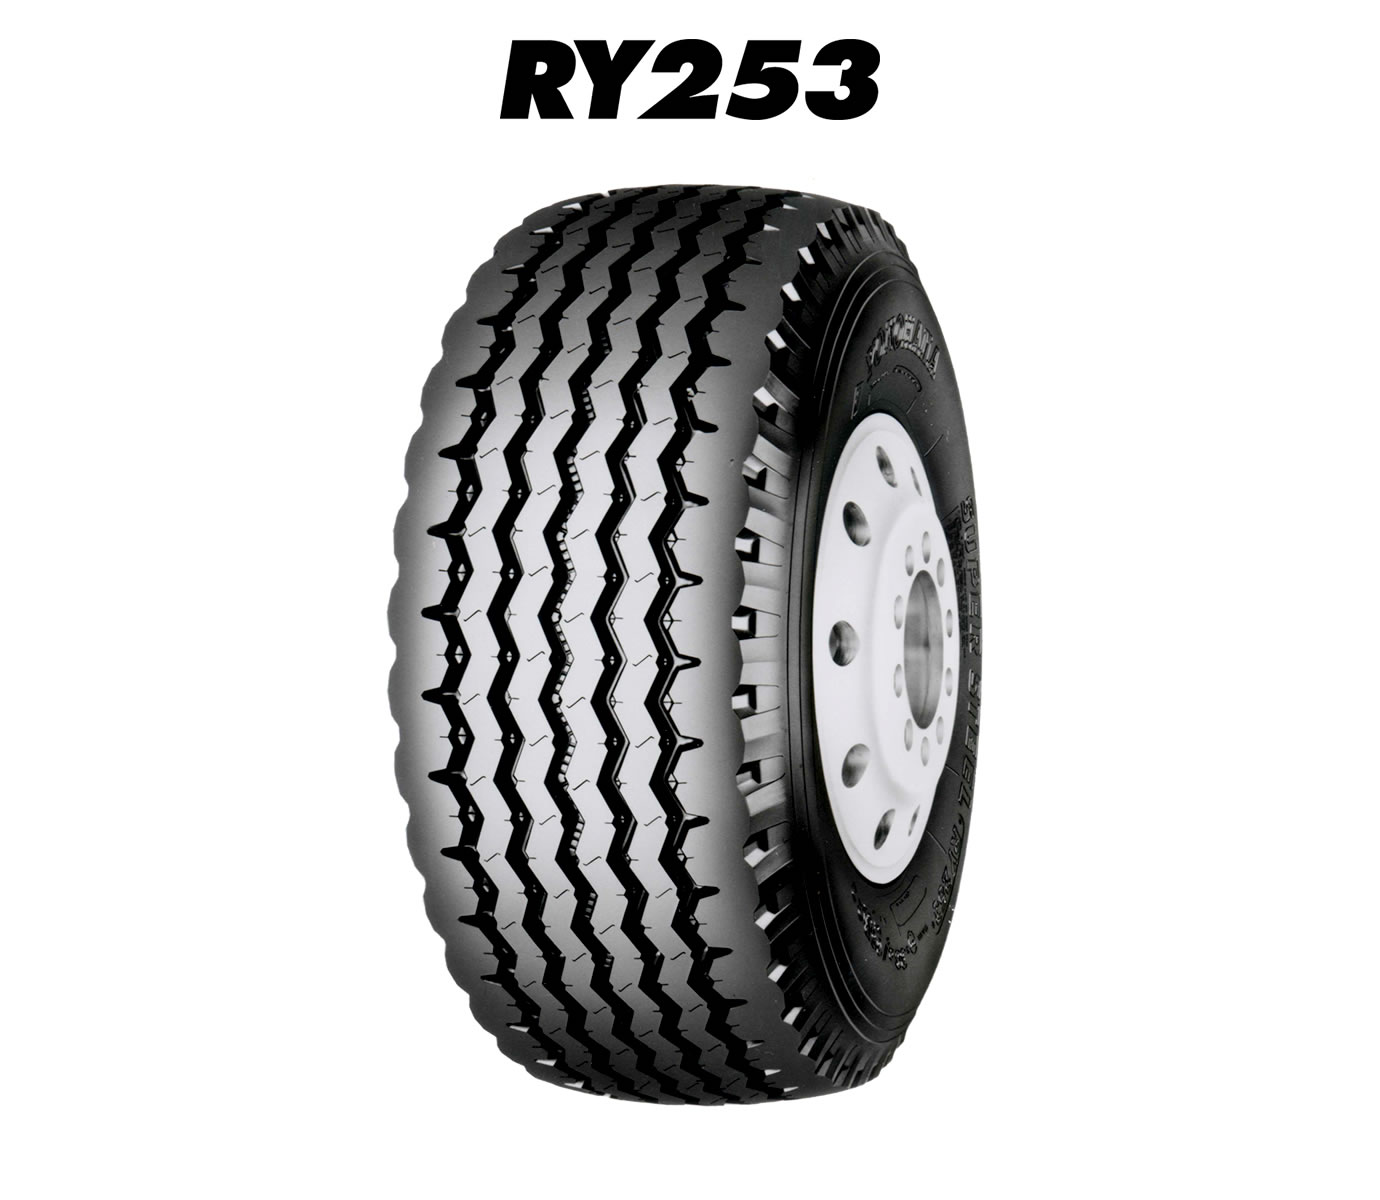 RY253